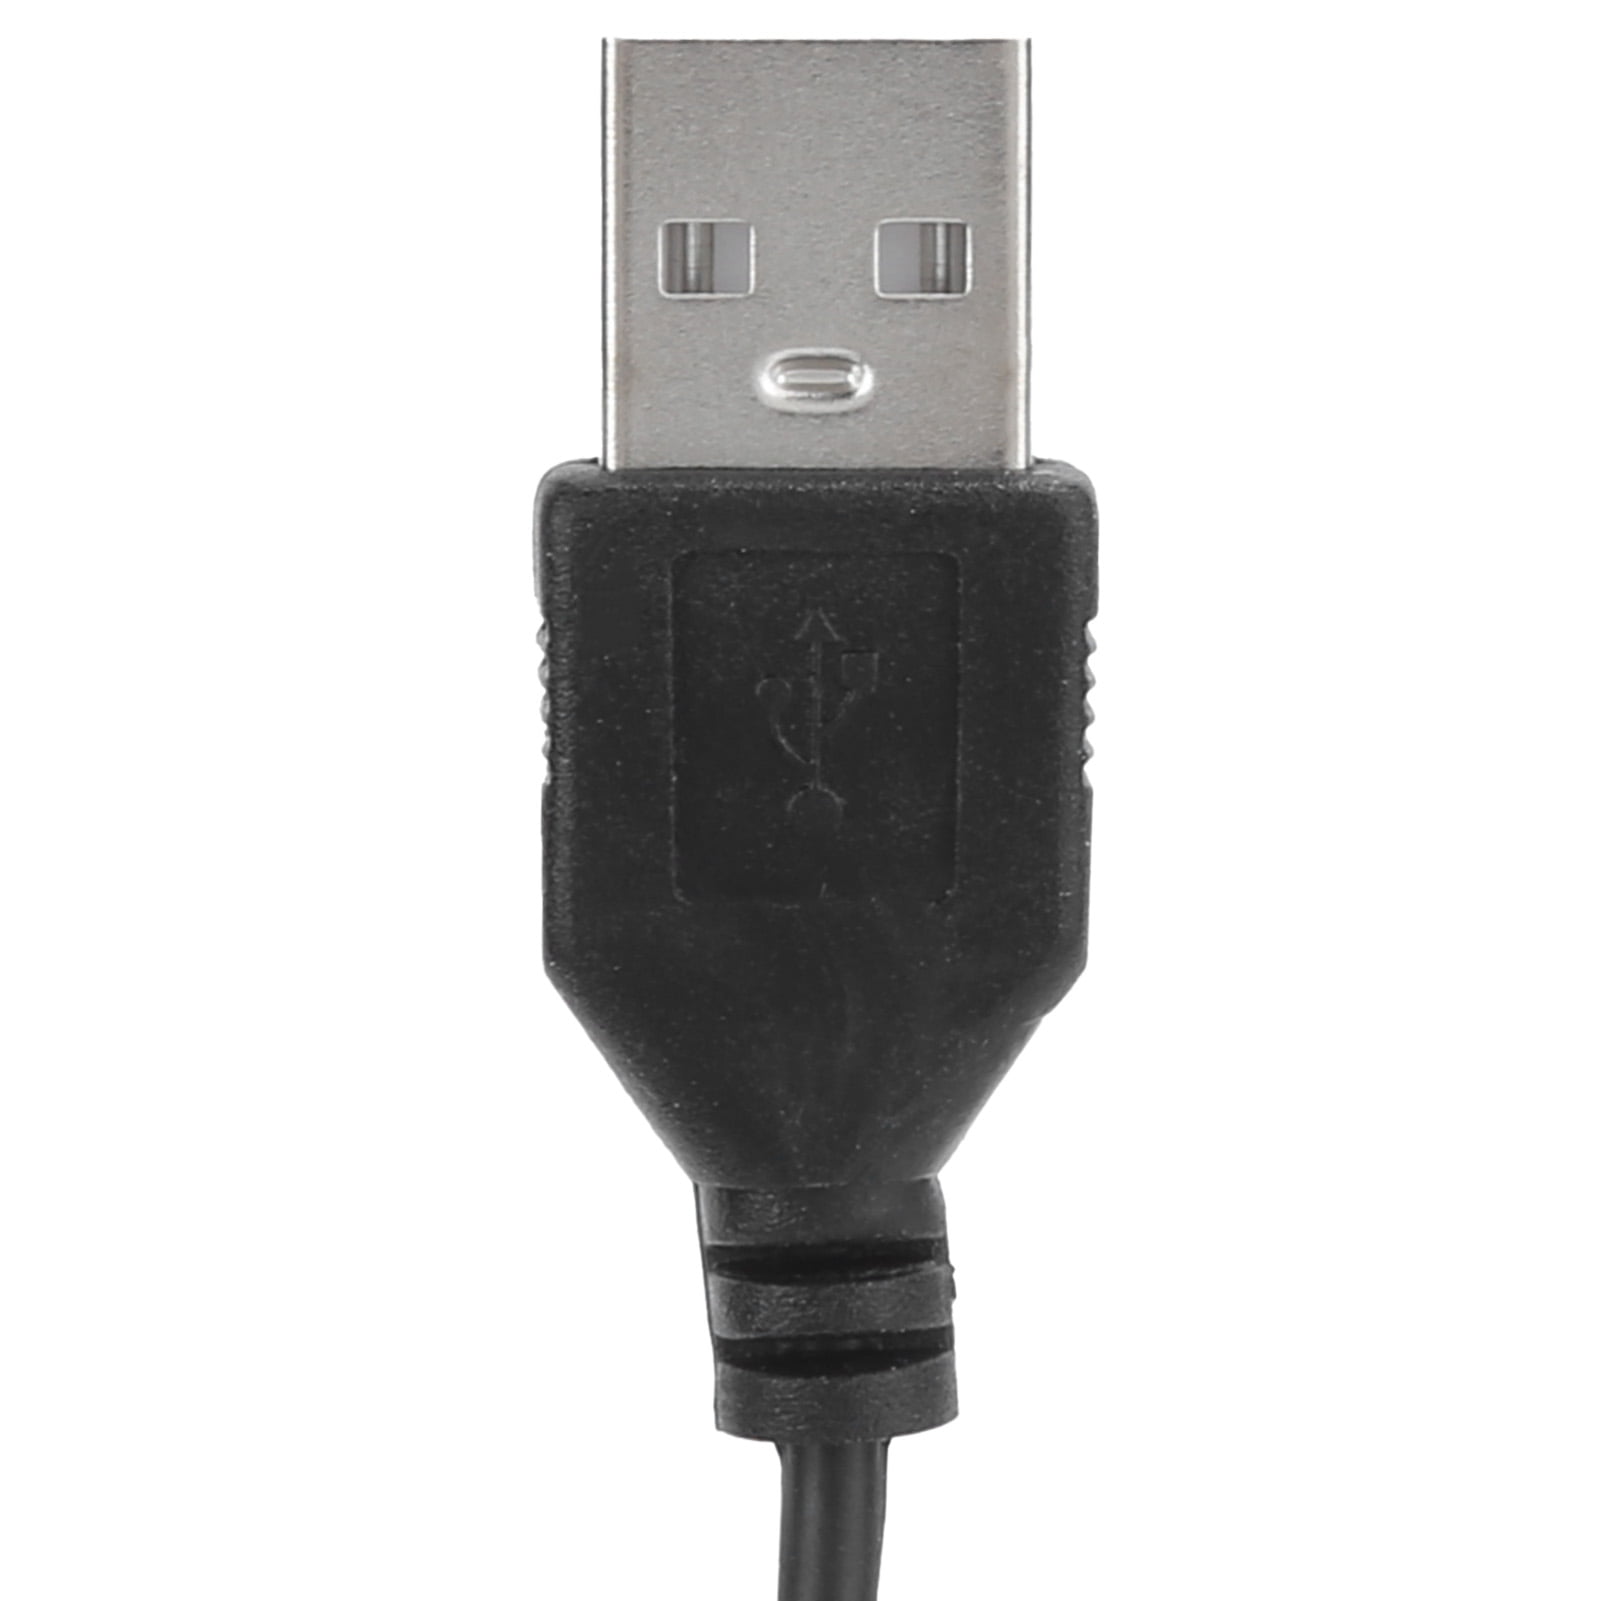 NEW CHIC ORTEK TECHNOLOGY ERGONOMIC USB EURO KEYBOARD EKB-880 GM8EKB104M  DS-RM0